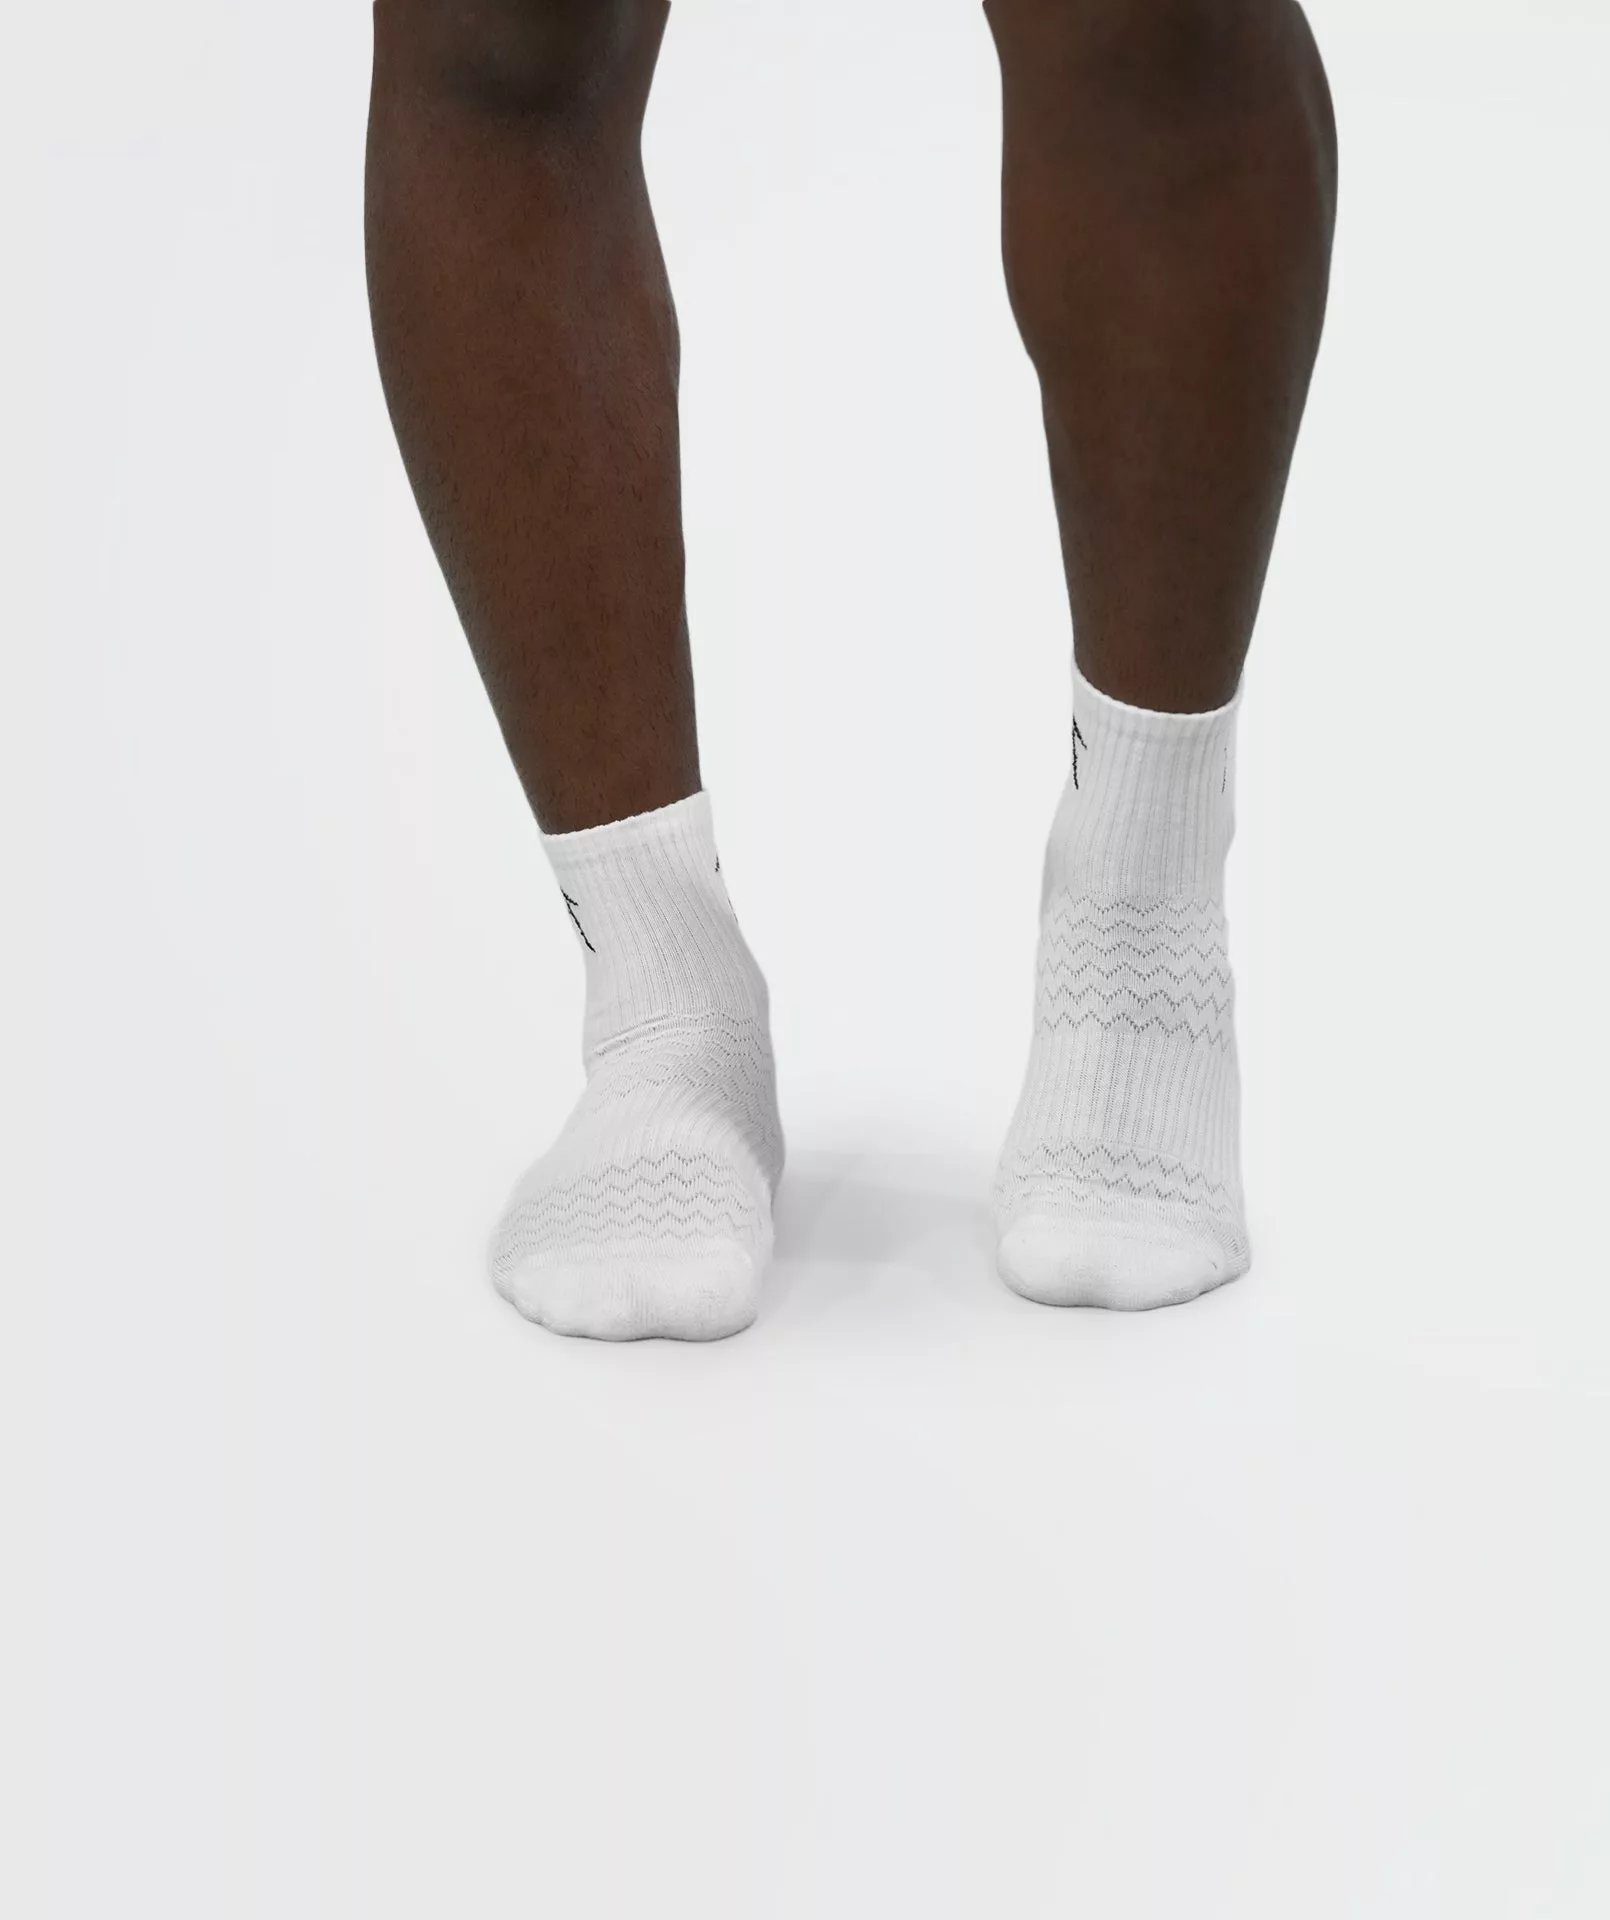 Unisex Short Crew Cotton Socks - Pack of 3 White Main Image